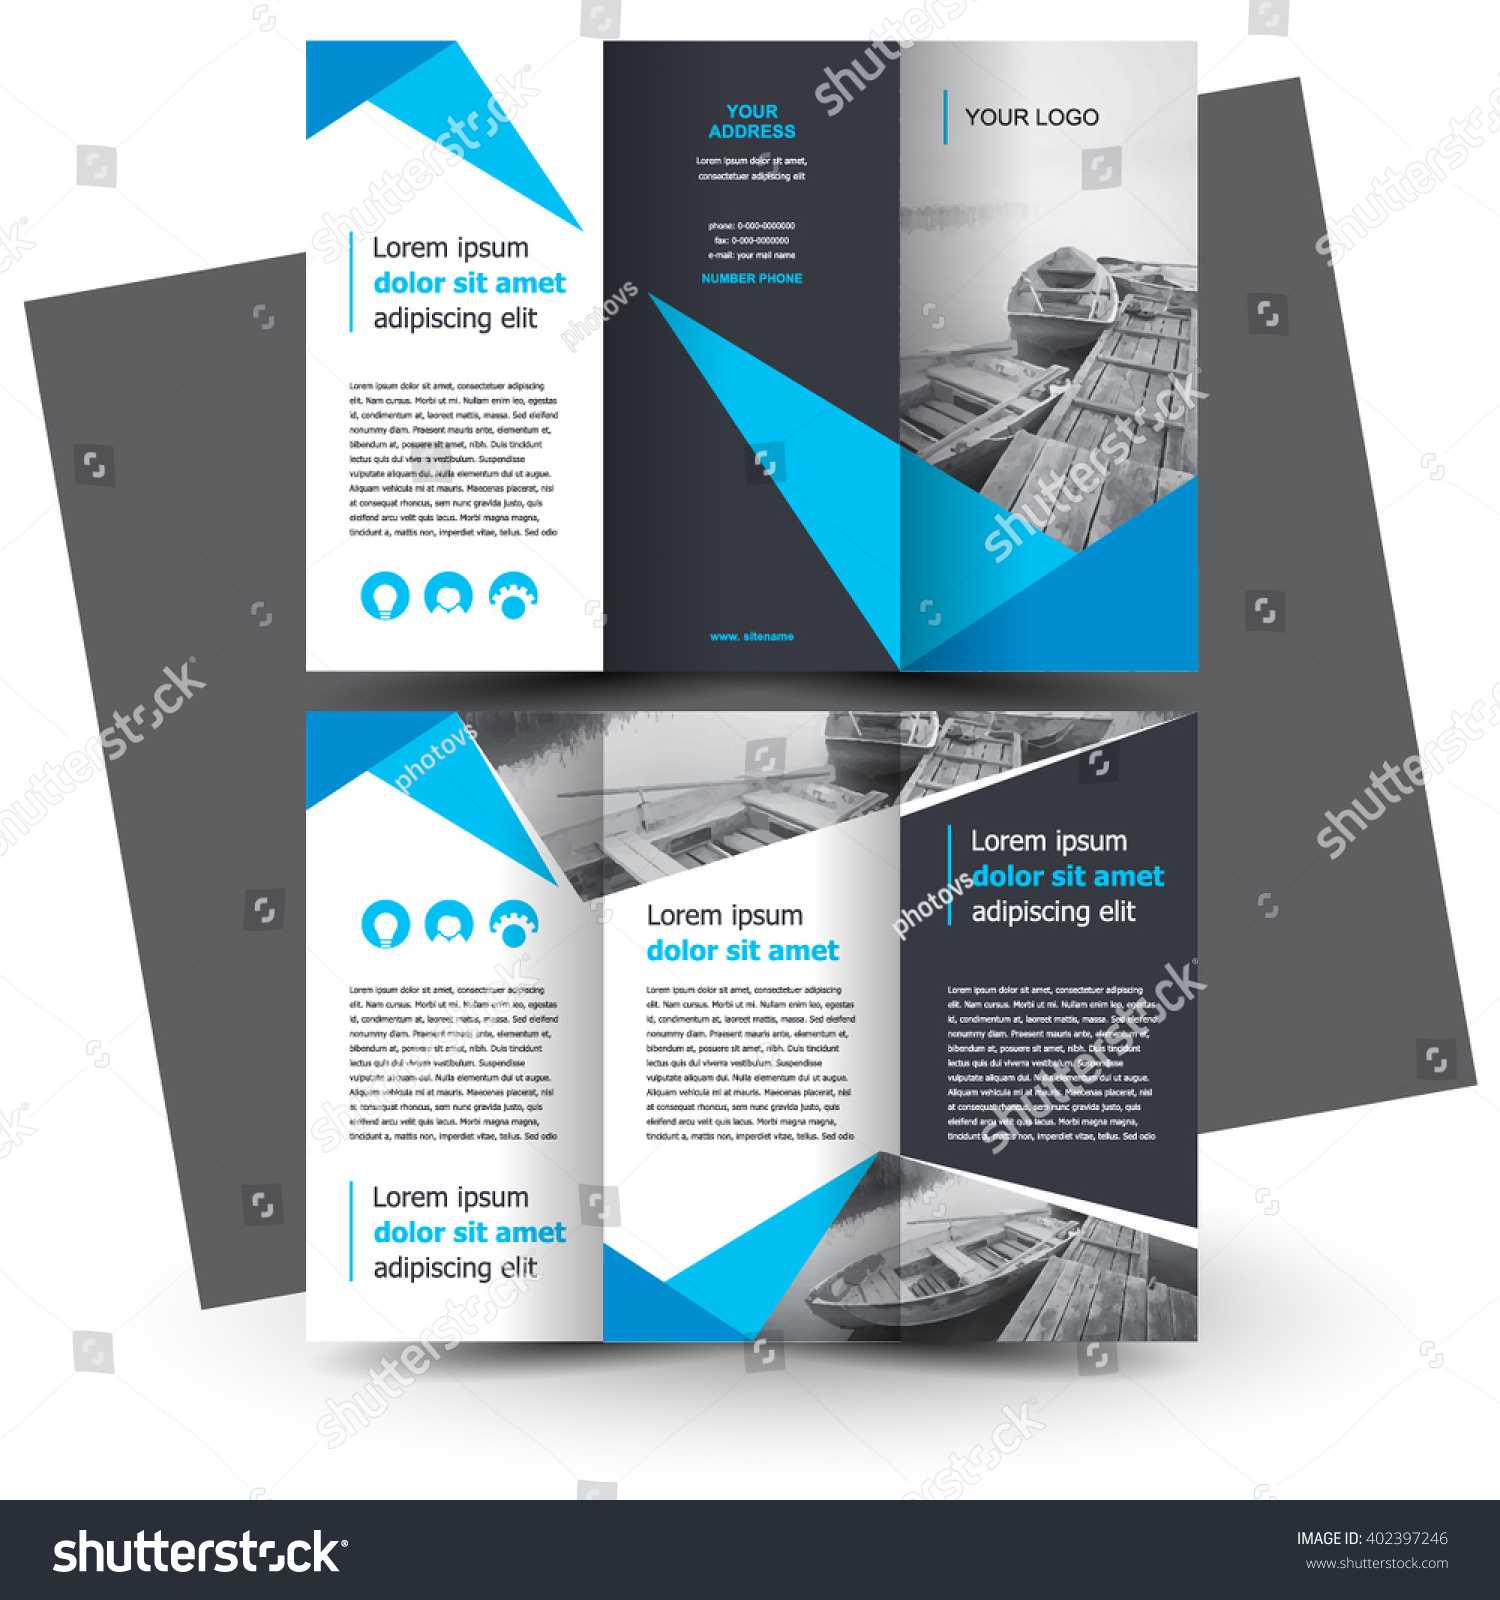 Catalog Design Templates Free Download ] – Brochure Design Regarding Engineering Brochure Templates Free Download